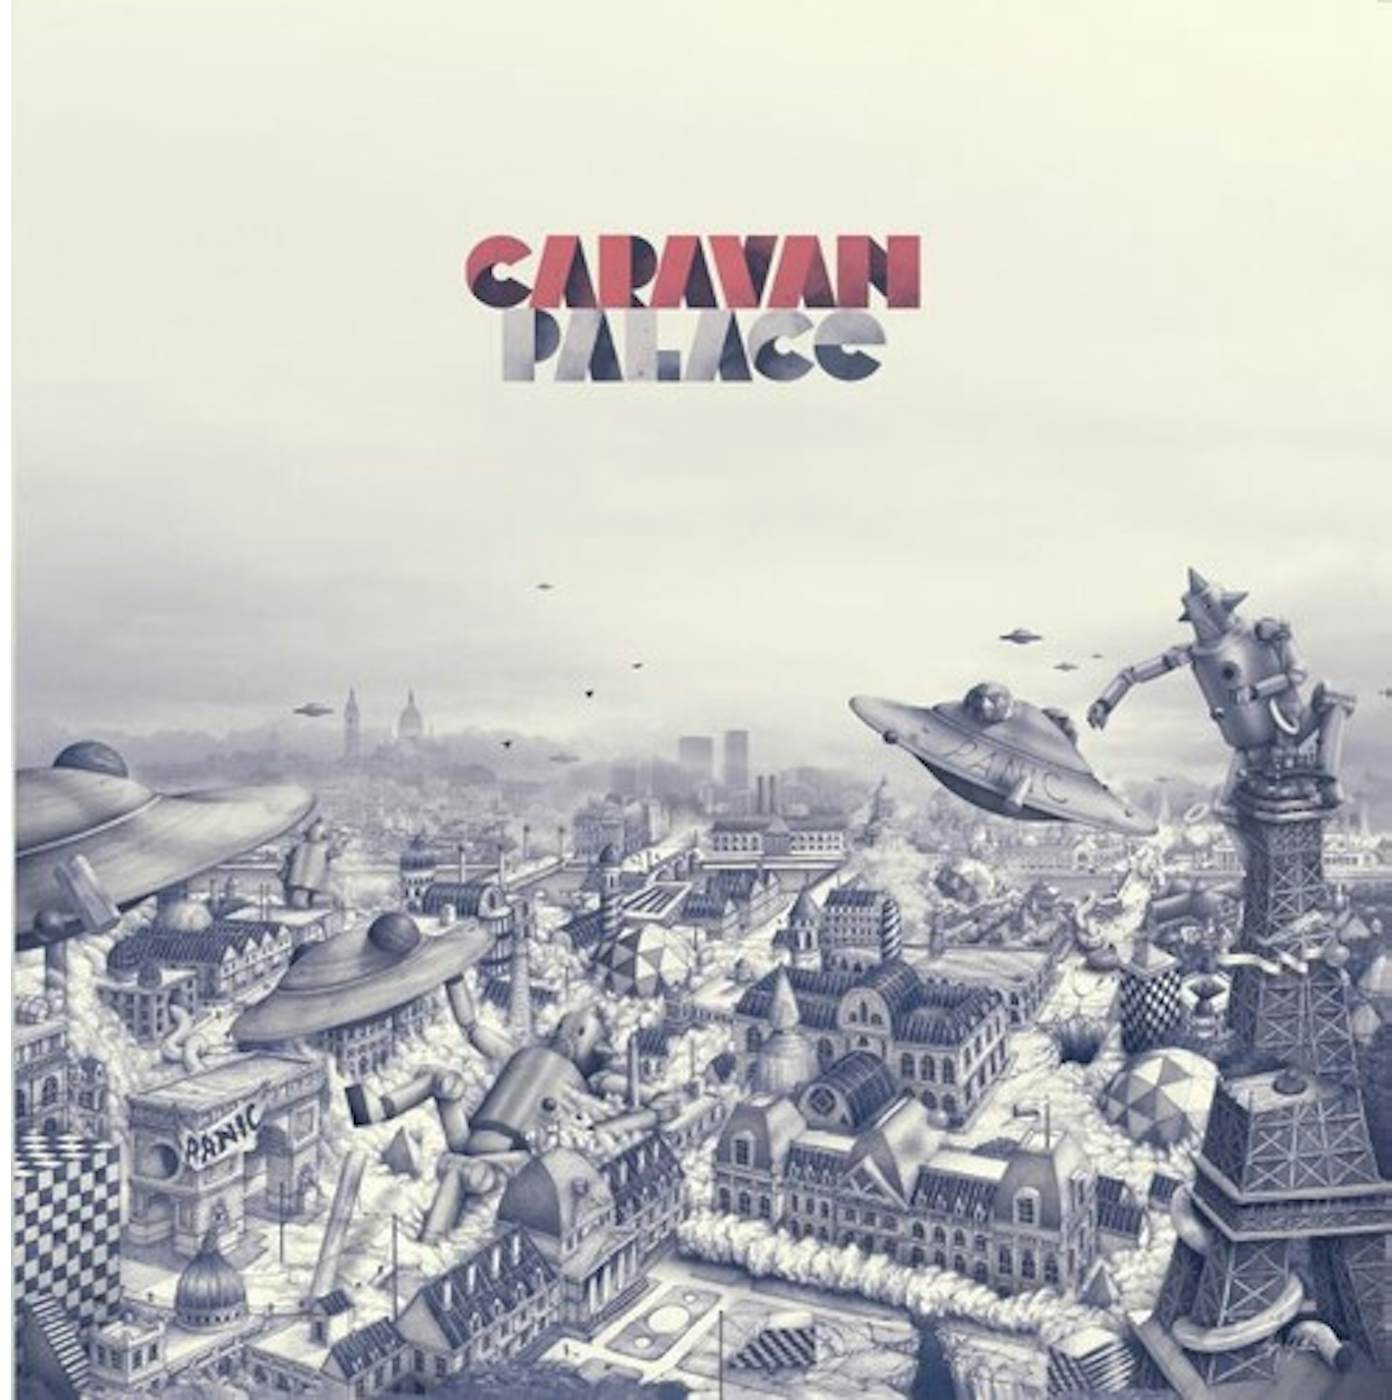 Caravan Palace Panic Vinyl Record